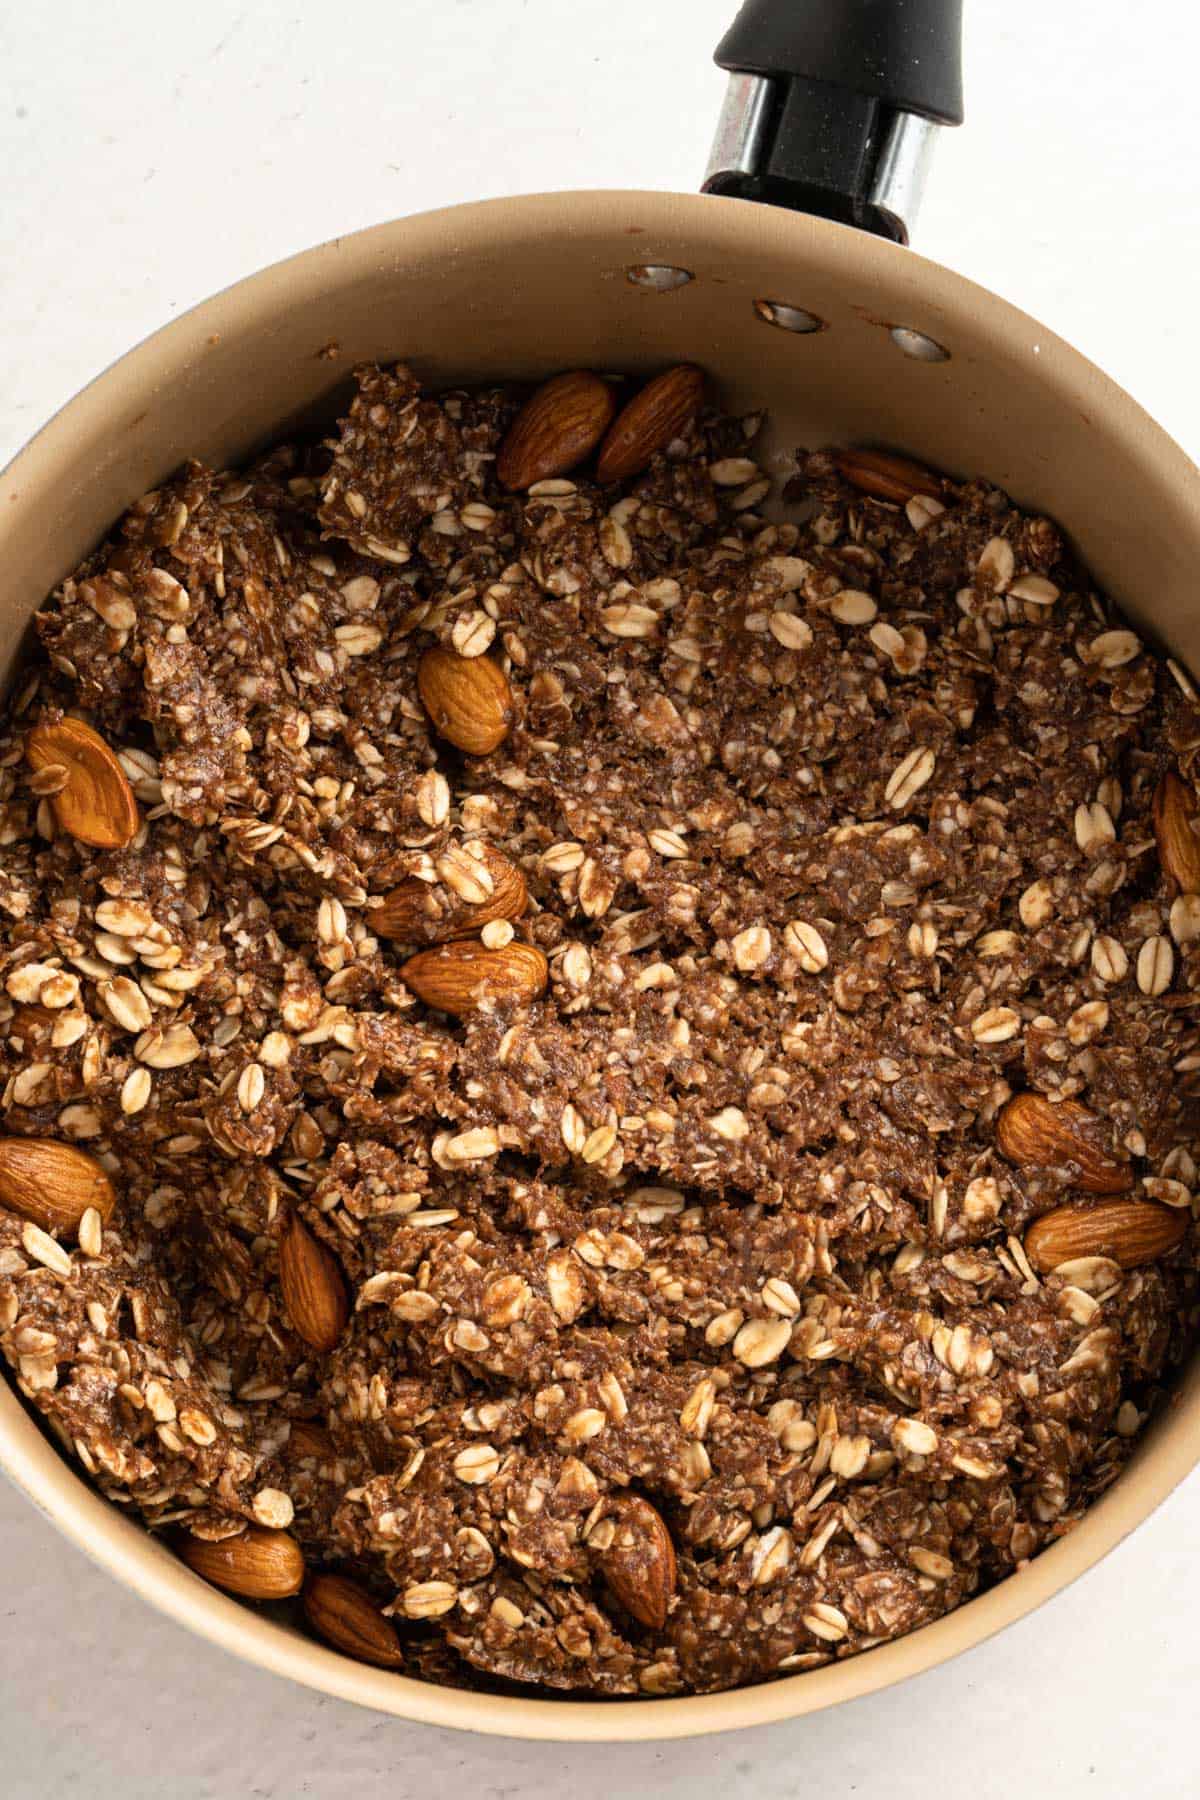 The final mix of a no bake chocolate oat bar recipe in a saucepan.